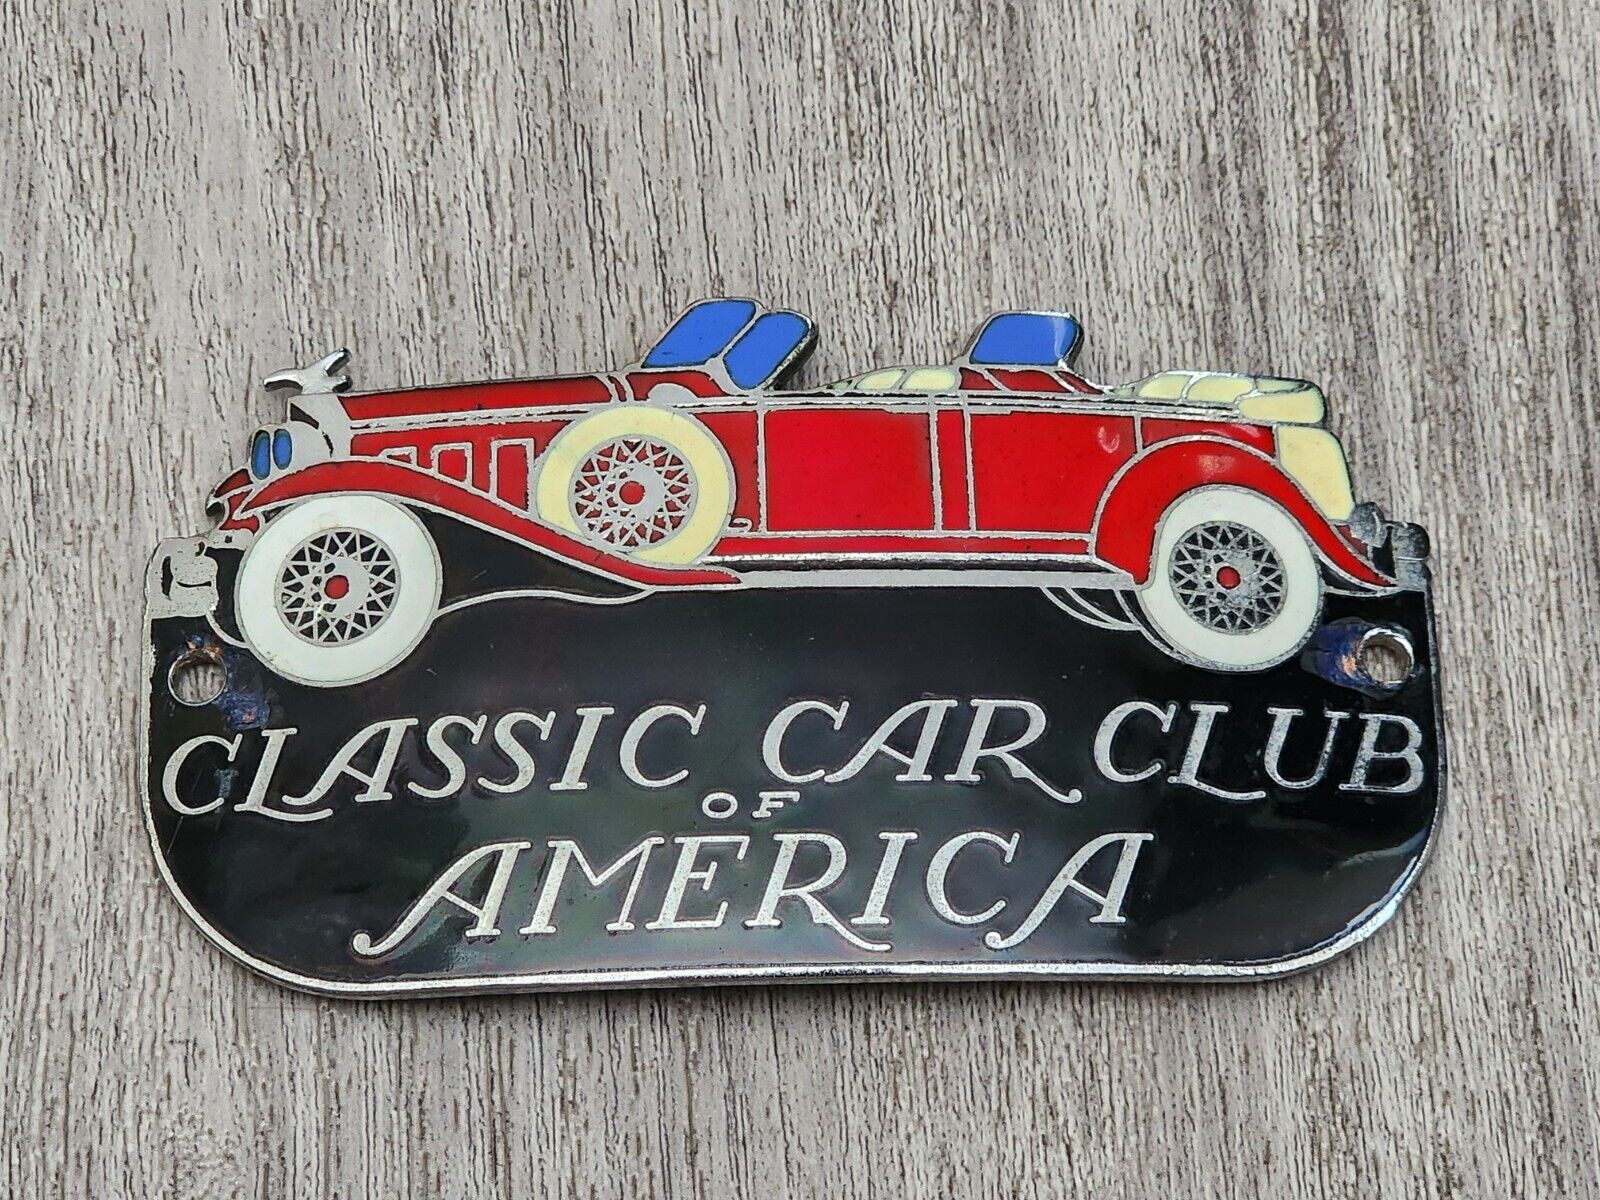 Vintage Classic Car Club of America Enamel Metal Badge Emblem Topper 1950's?